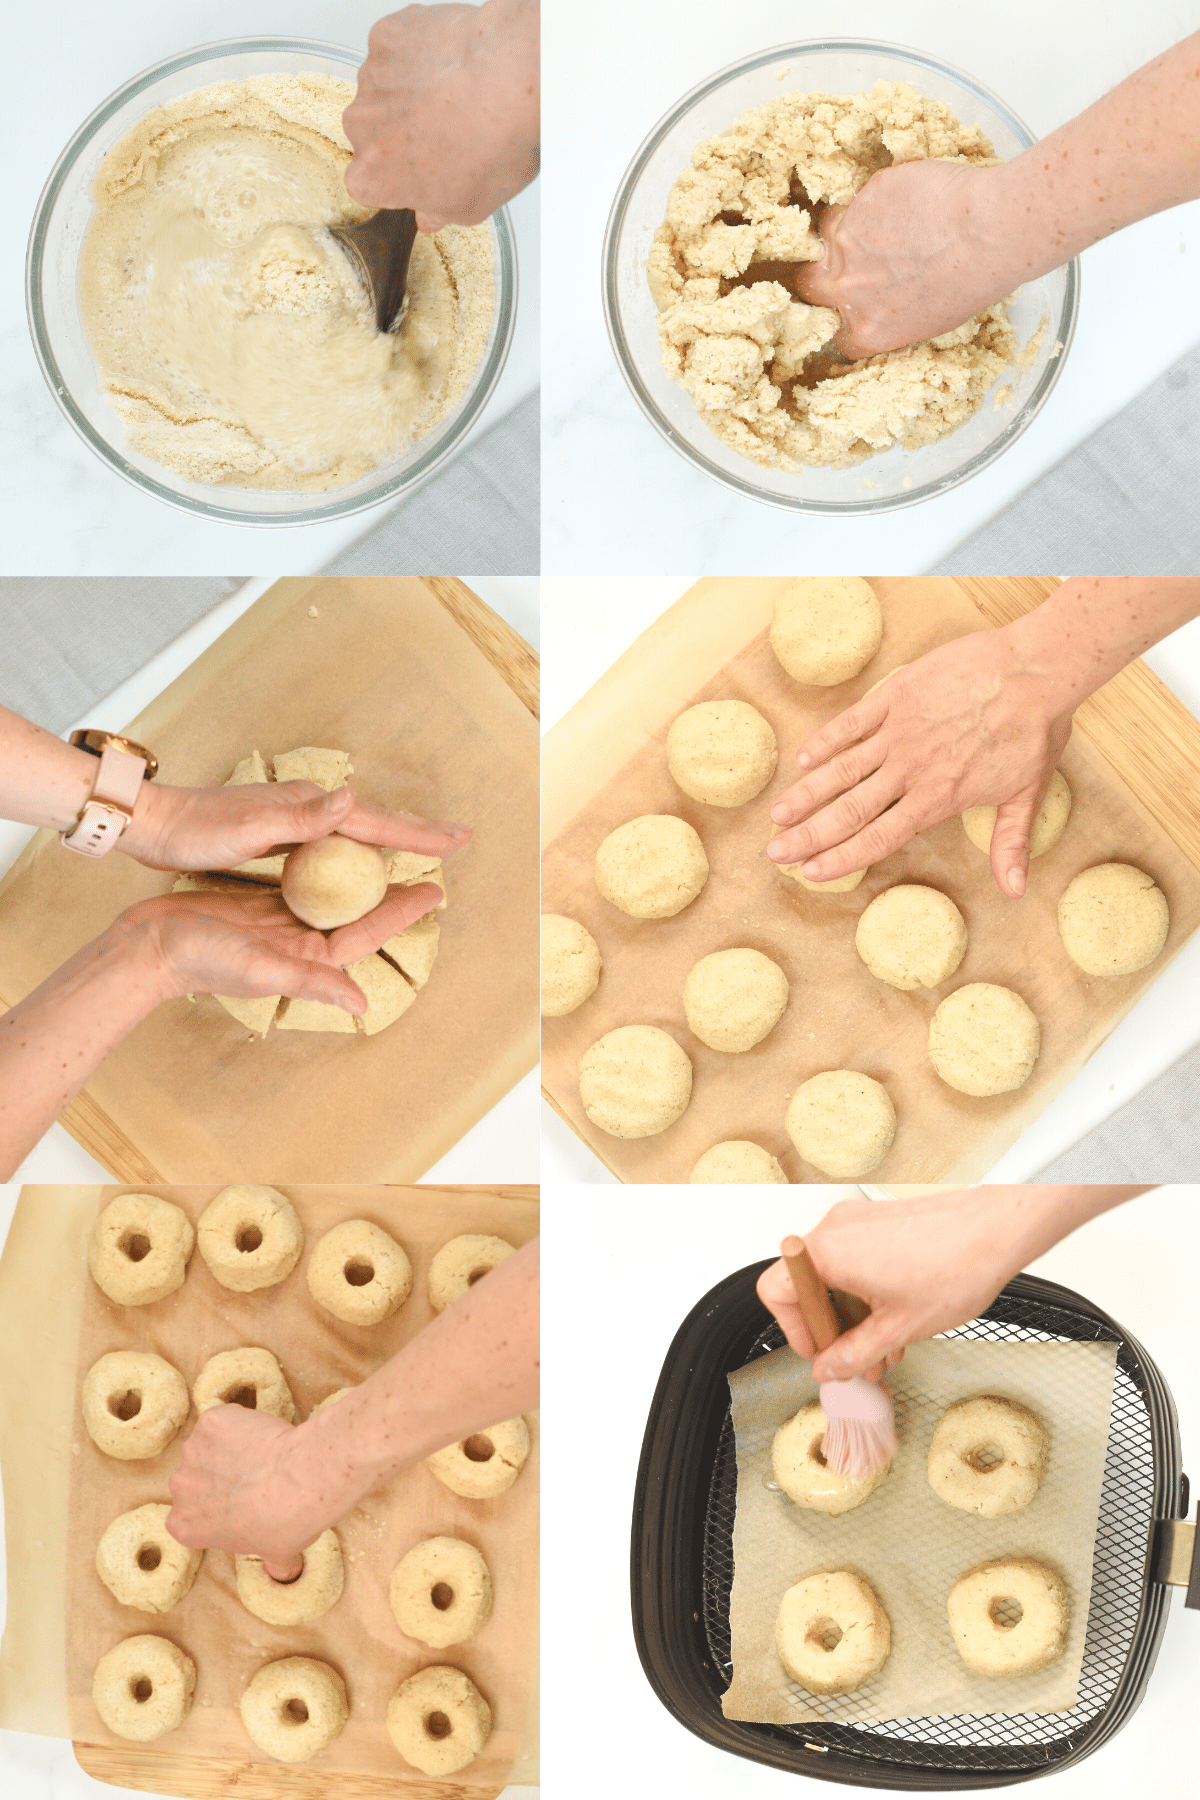 How to make Keto Mini Donuts